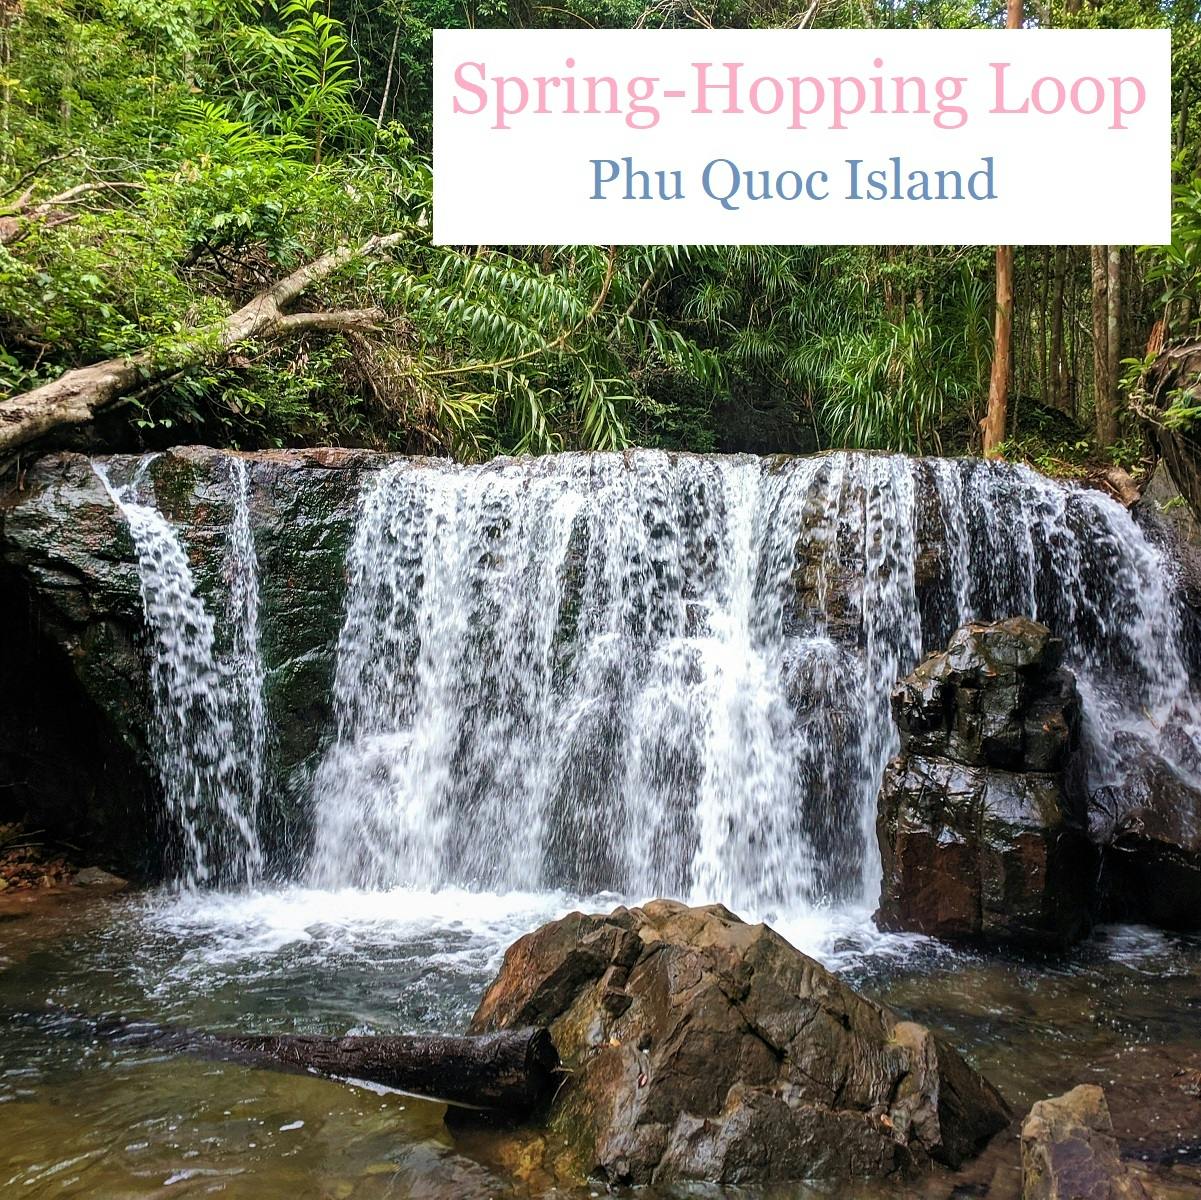 The Spring-Hopping Loop, Phu Quoc Island, Vietnam